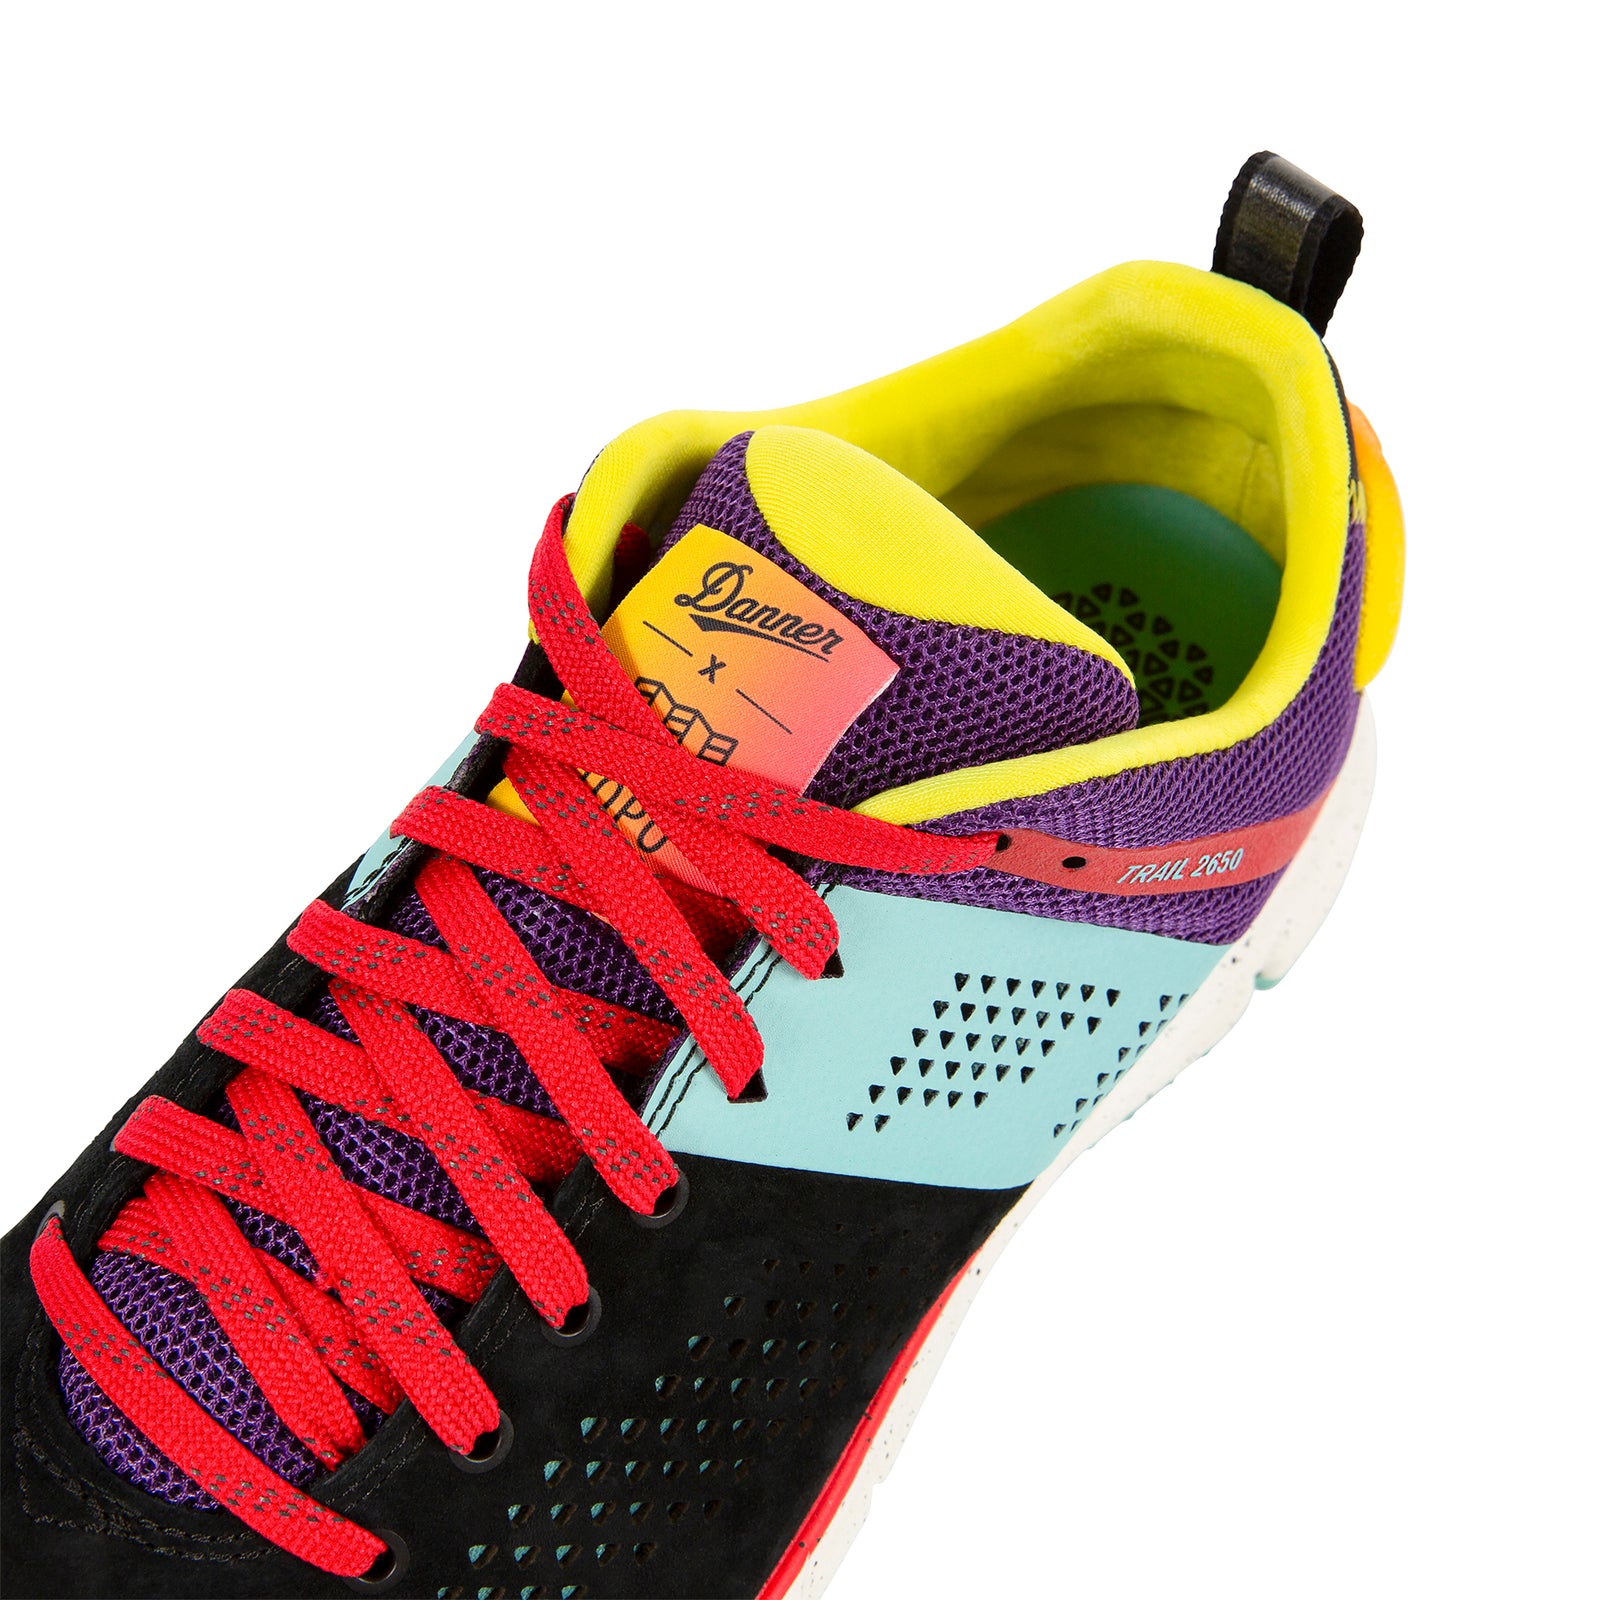 Topo Designs x Danner women's trail running shoe close up shot of top